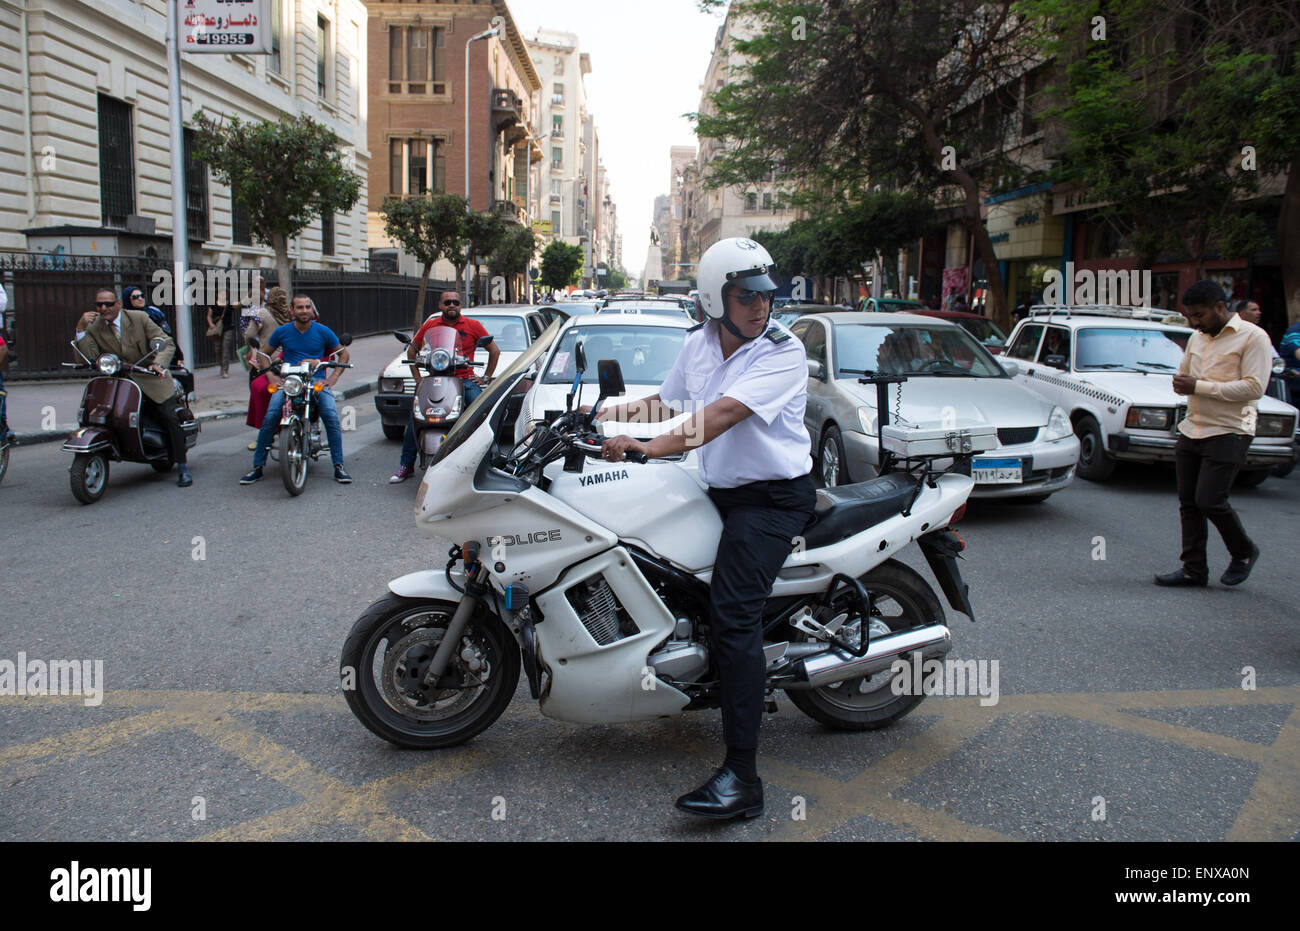 A police officer on a motorcylce blocks a street in downtown Cairo, Egypt, 04 May 2015. BERND VON JUTRCZENKA/dpa Stock Photo